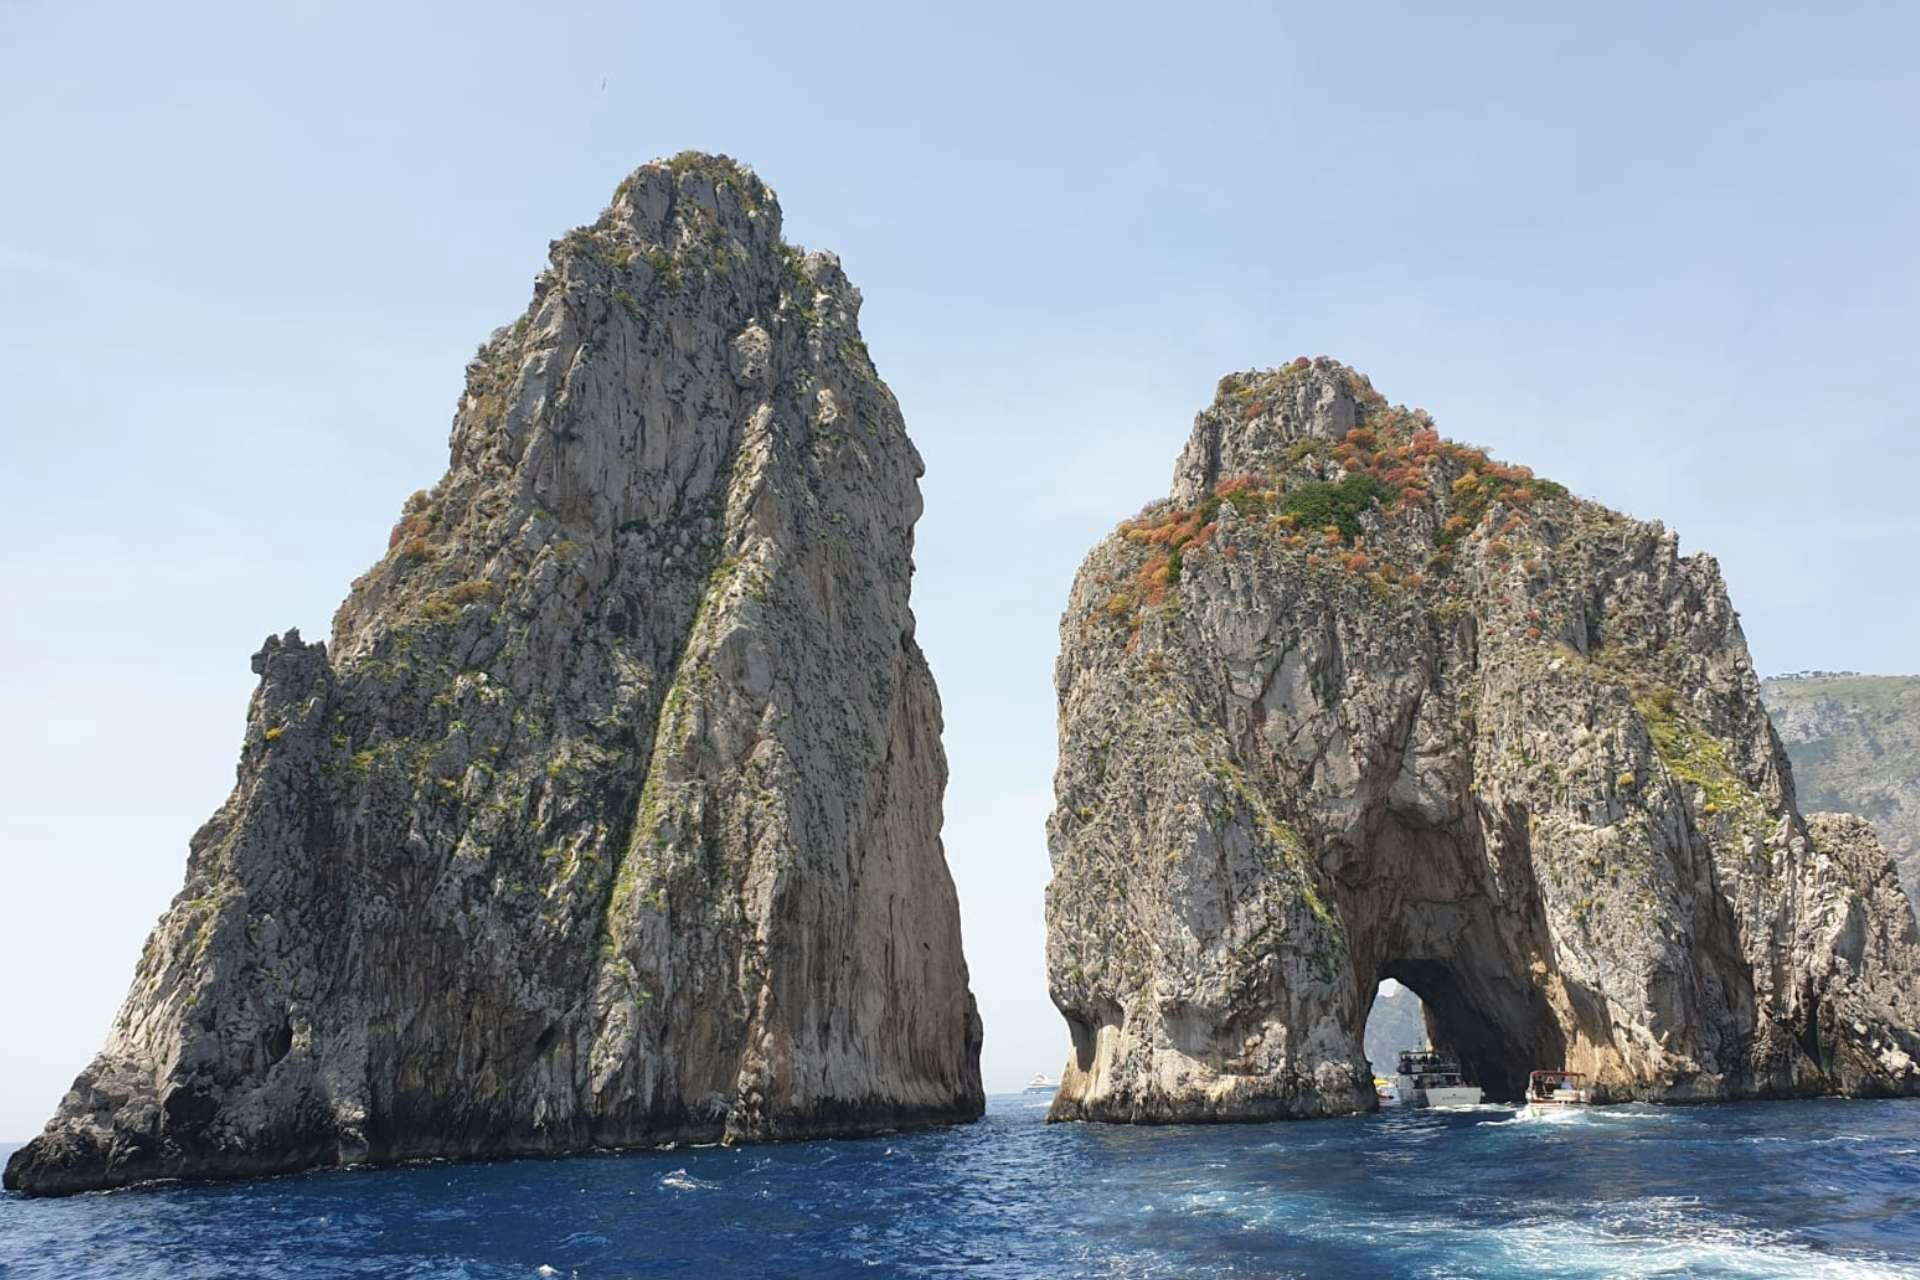 Visit Capri with comfort from the Vesuvian Coast